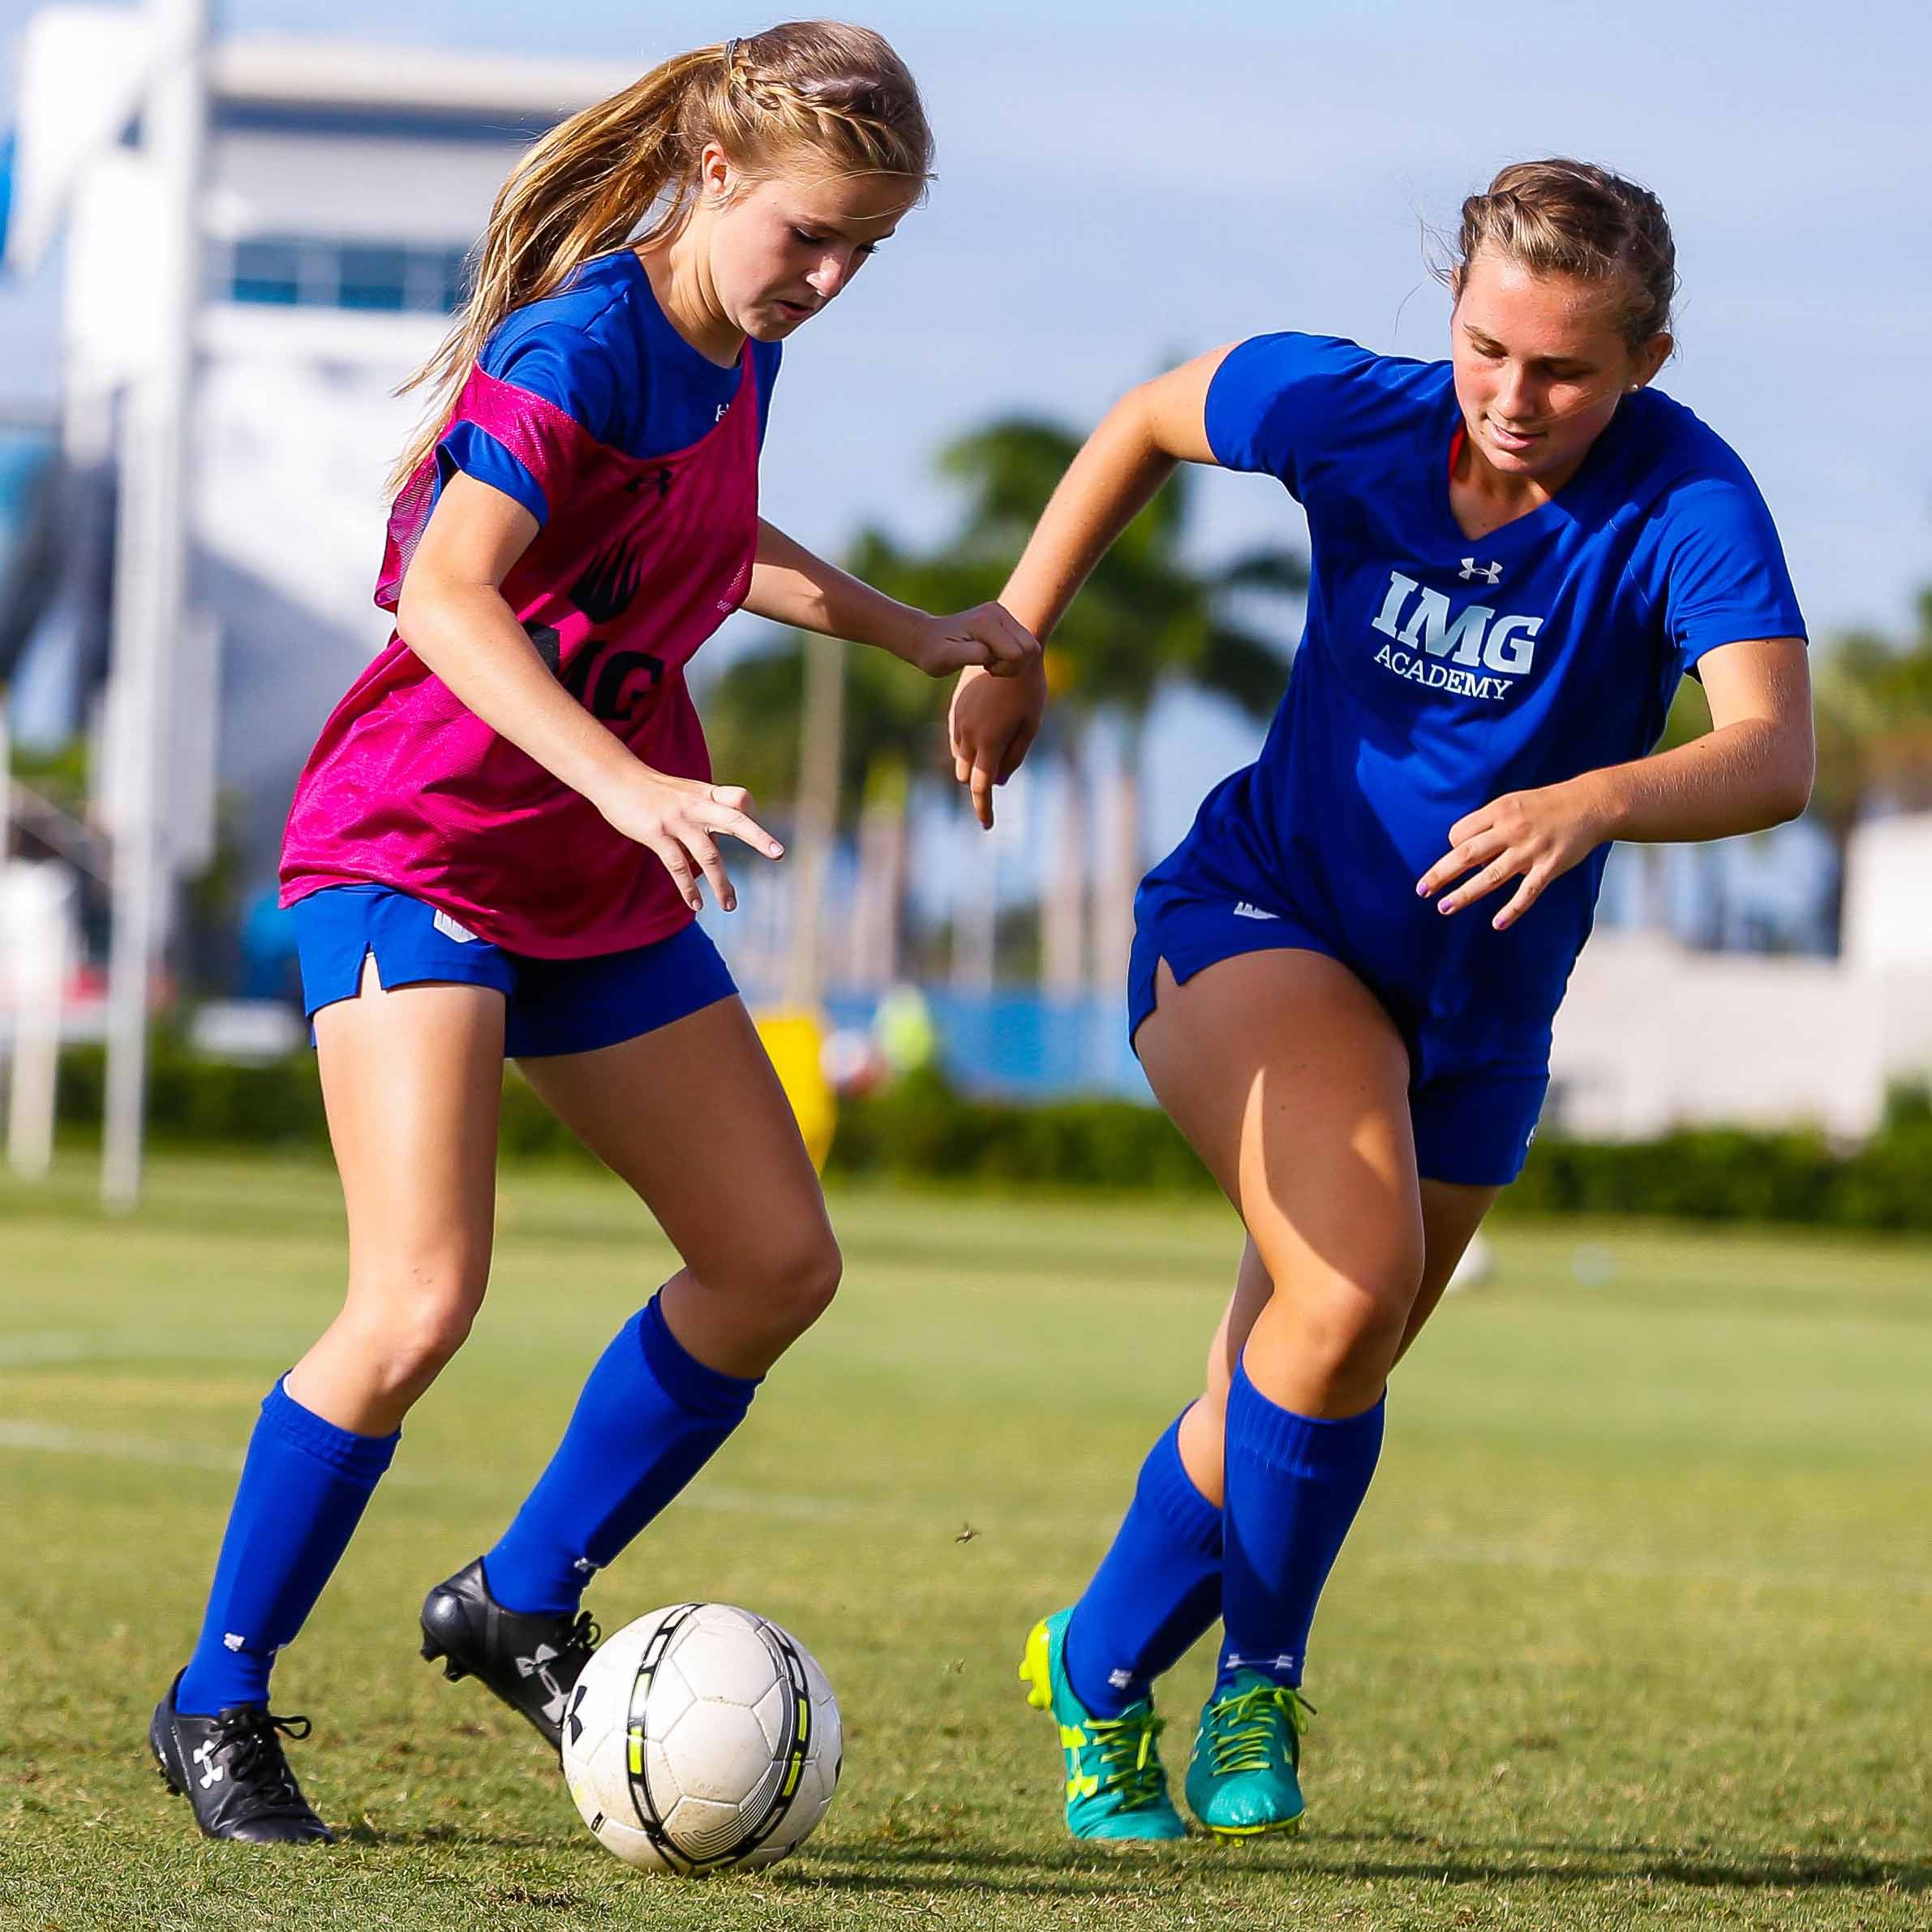 Girls Playing Soccer Team